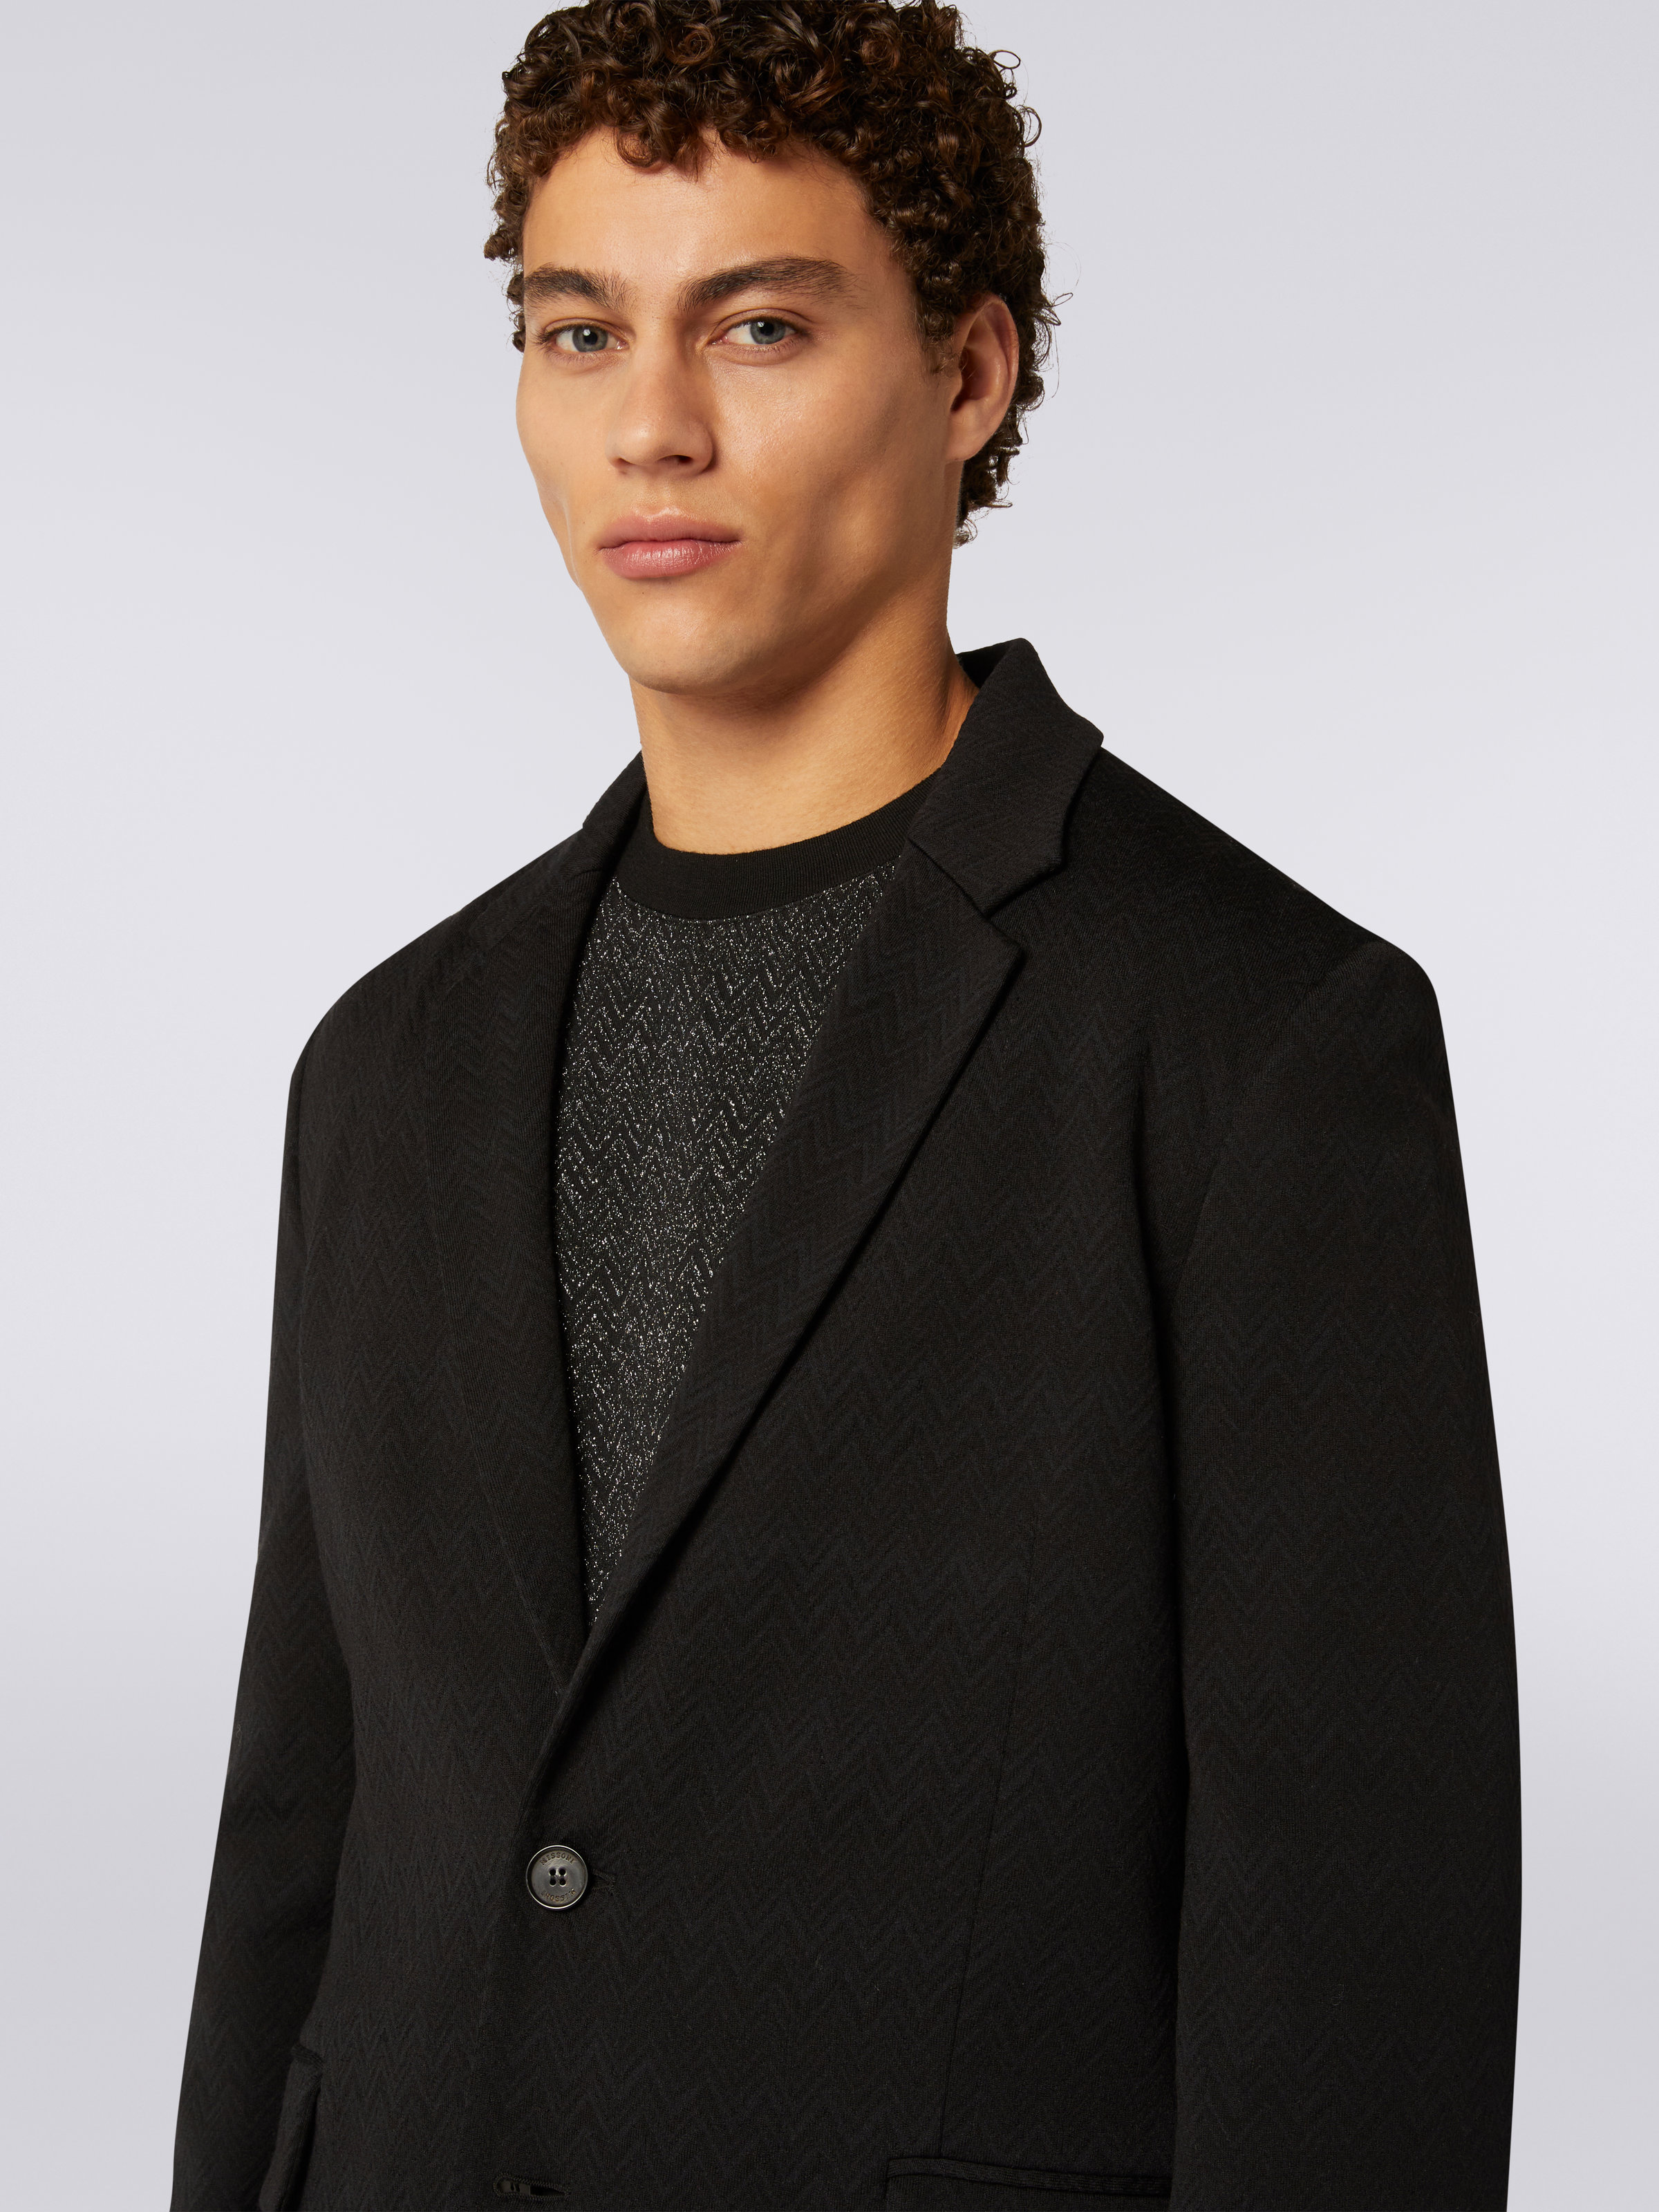 Wool blend jacket with chevron pattern, Black    - 4